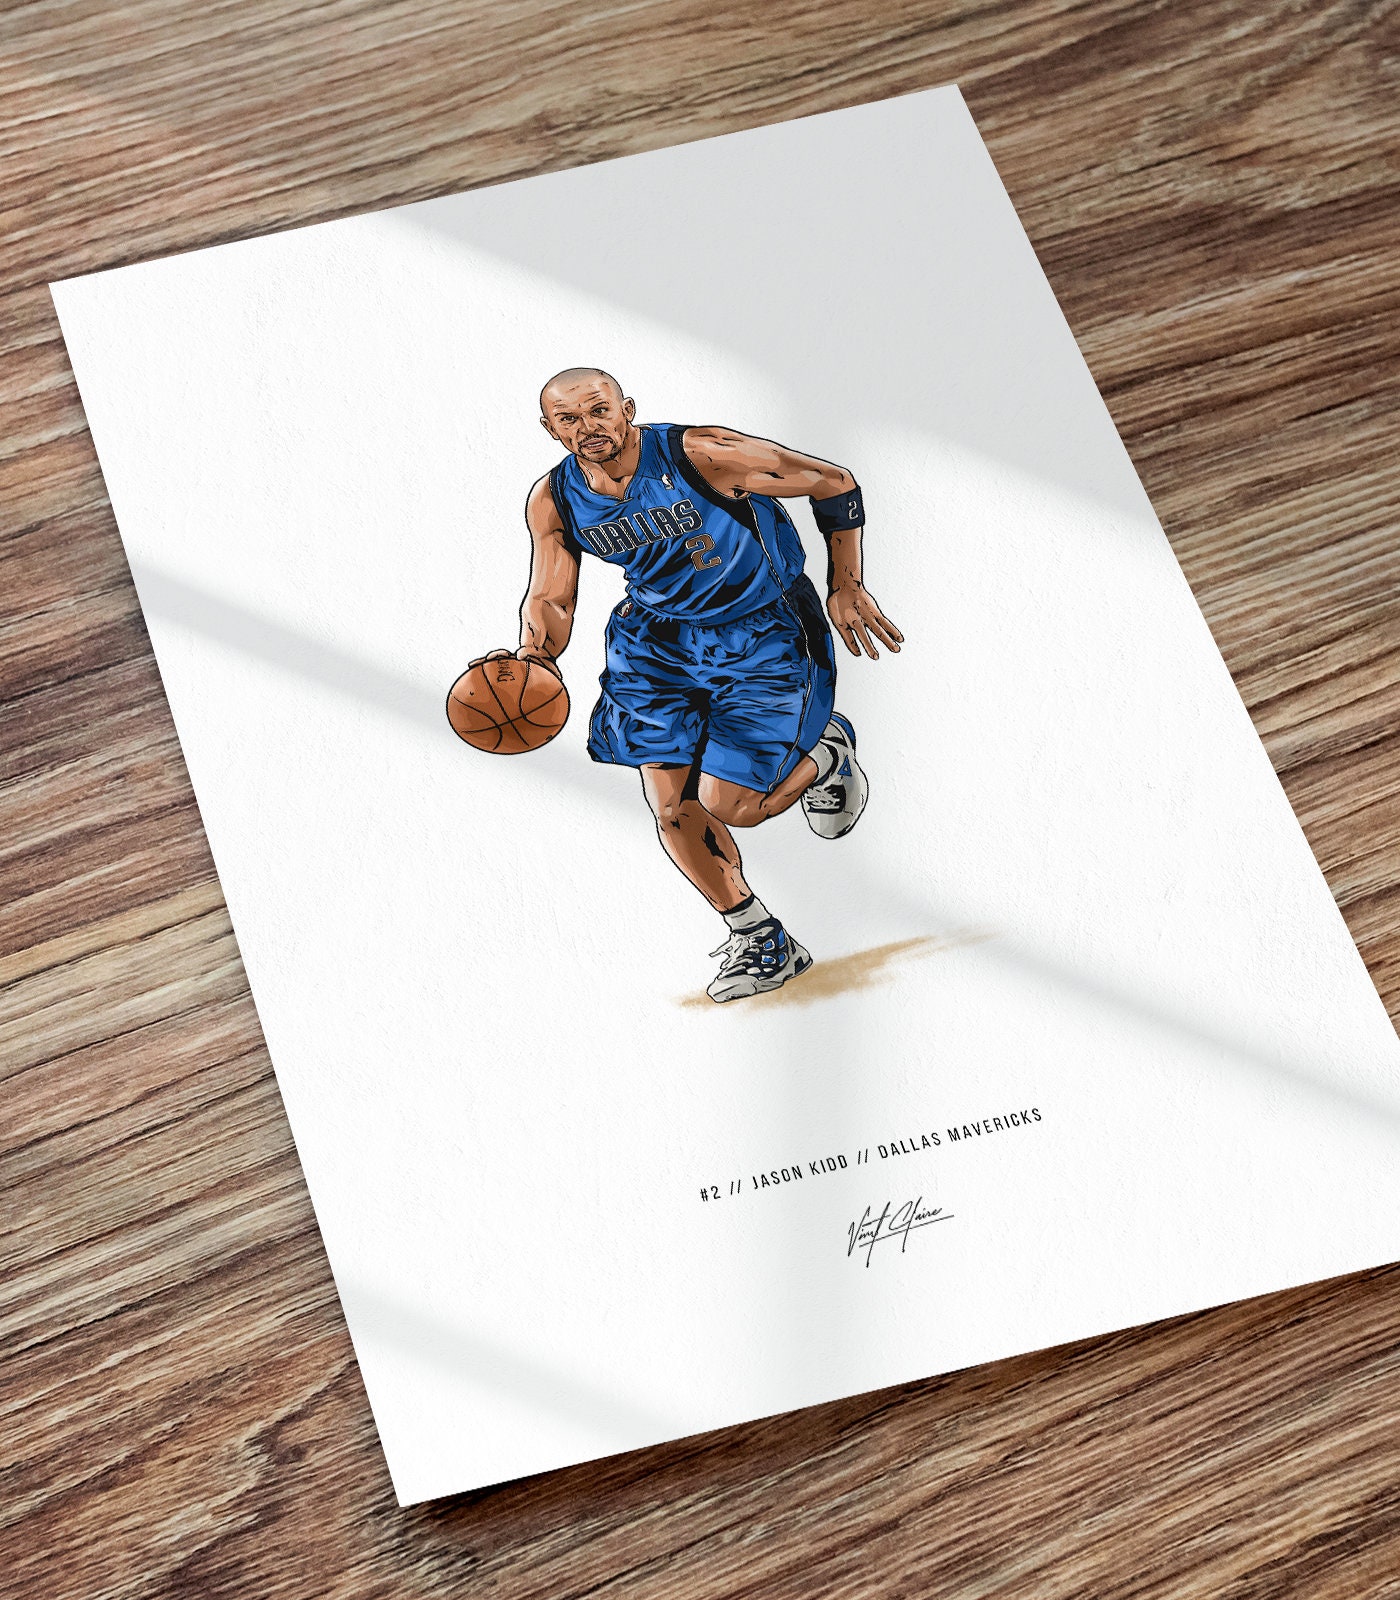 Dallas Mavericks NBA US Camo Pattern 3D All Over Print Hoodie For Men And  Women